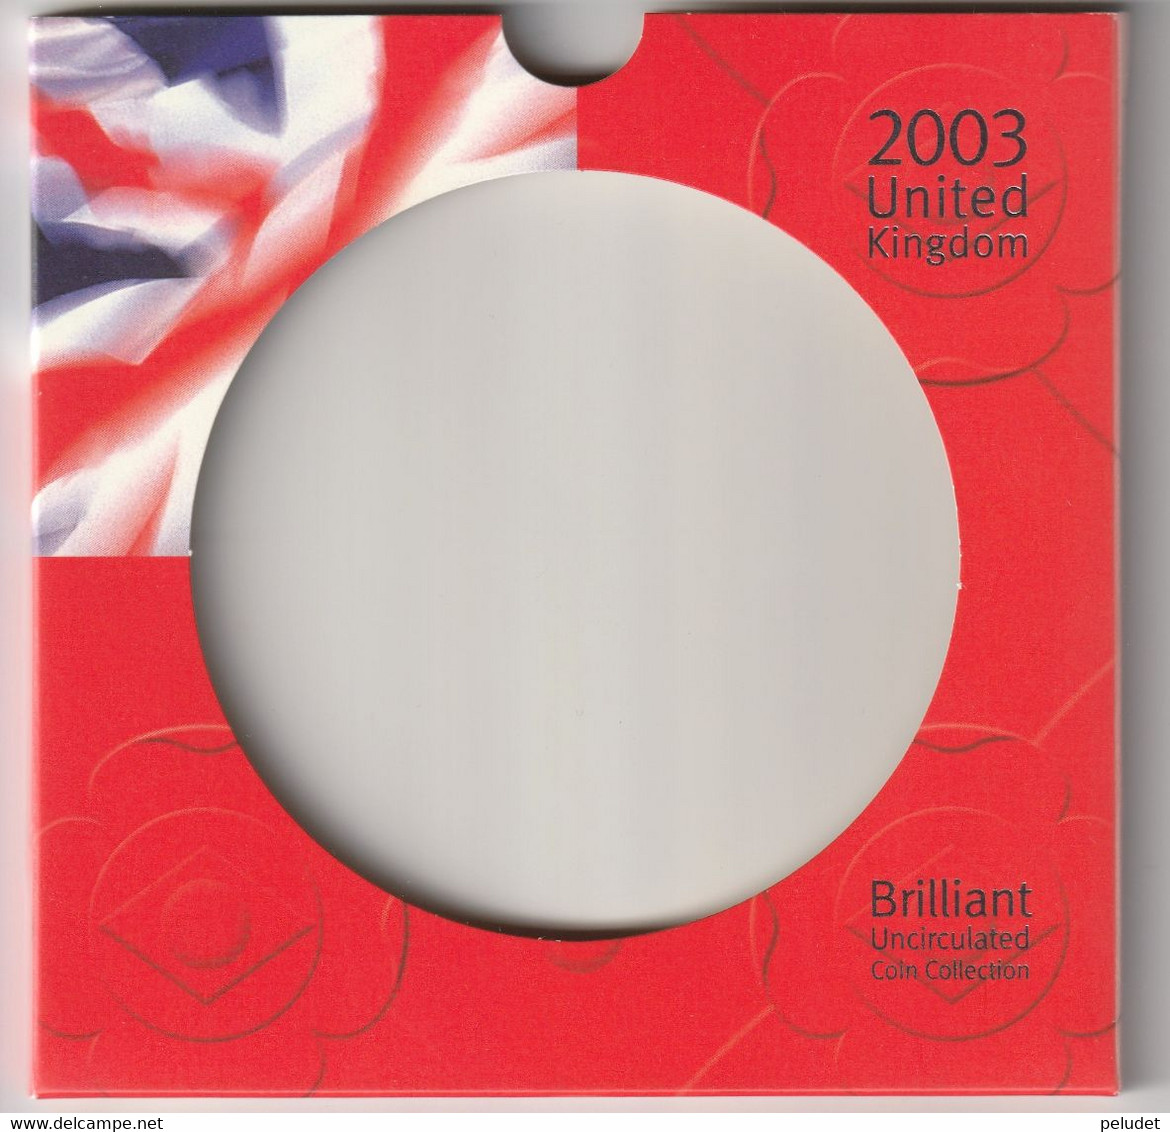 United Kingdom 2003 Brilliant Uncirculated Coin collection BU